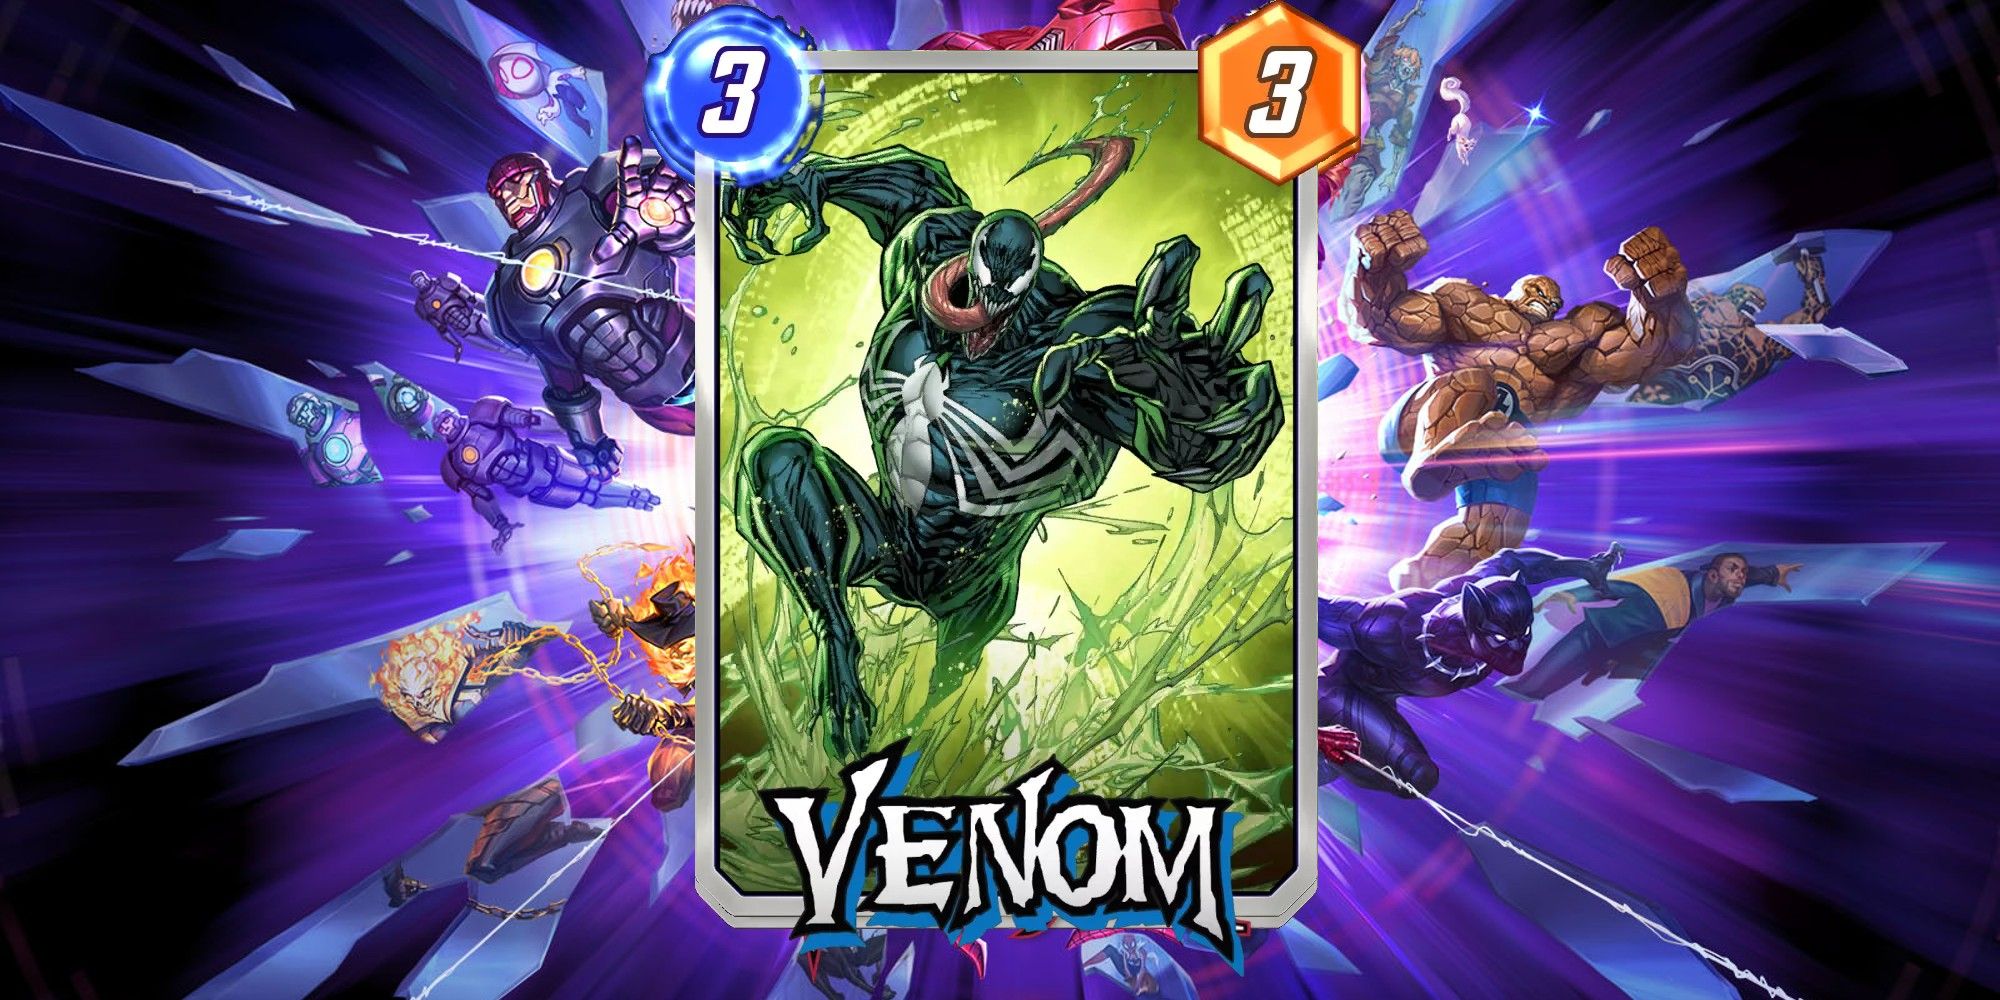 Venom's card